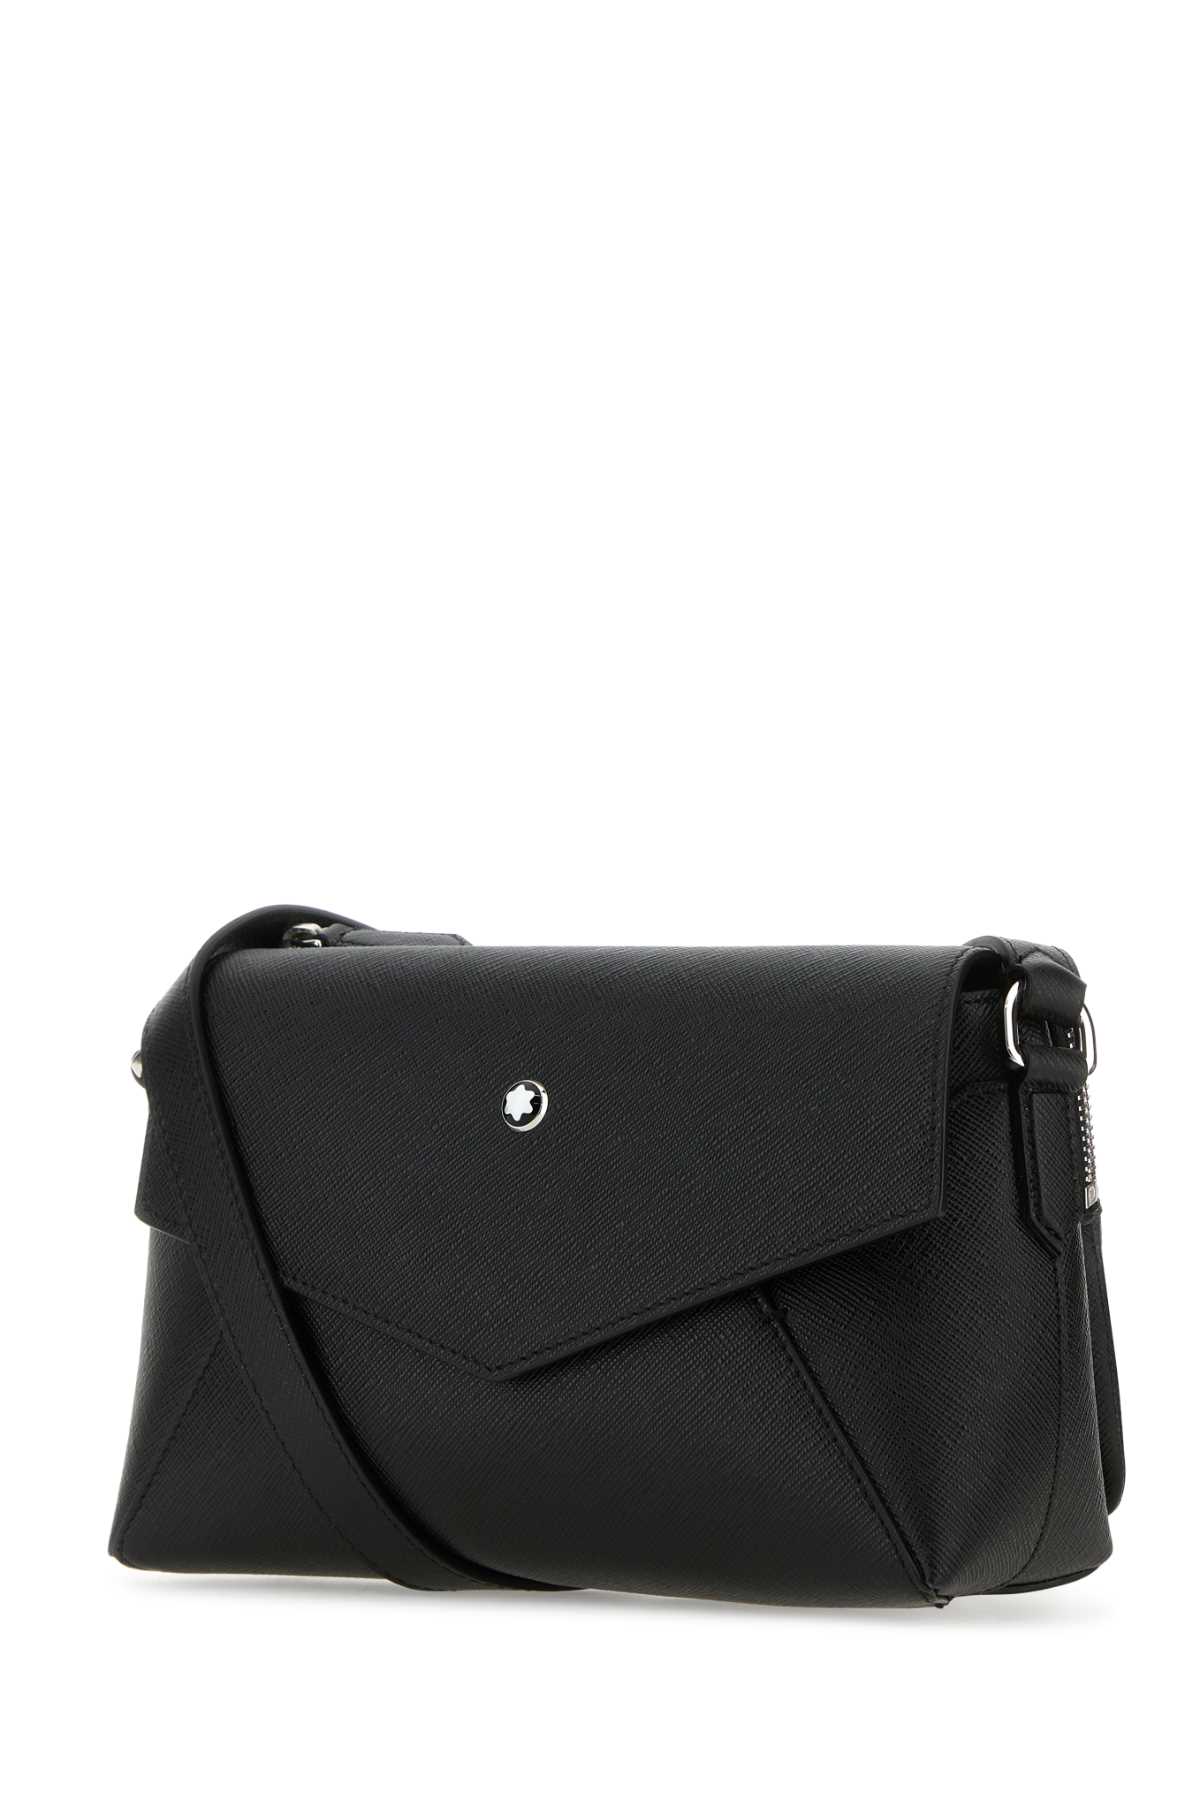 Shop Montblanc Black Leather Crossbody Bag